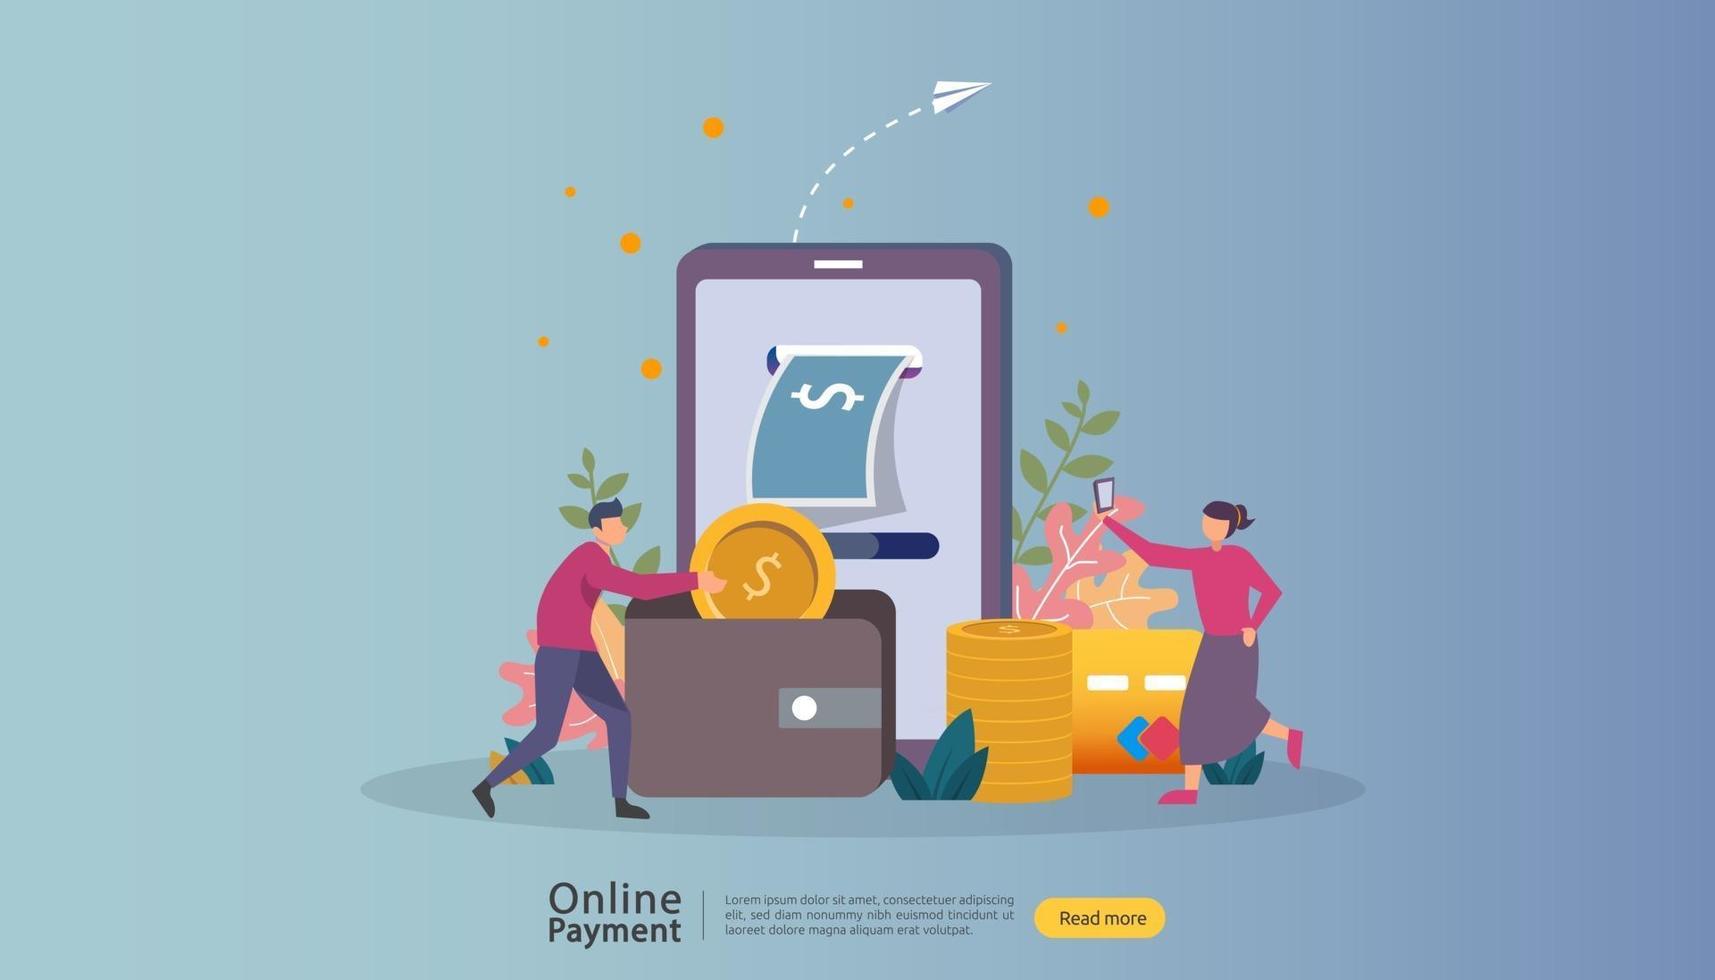 E-Commerce-Markt-Shopping-Online-Illustration mit winzigem Menschencharakter. mobiles Zahlungs- oder Geldtransferkonzept. Vorlage für Web-Landingpage, Banner, Präsentation, Social Media, Printmedien. vektor